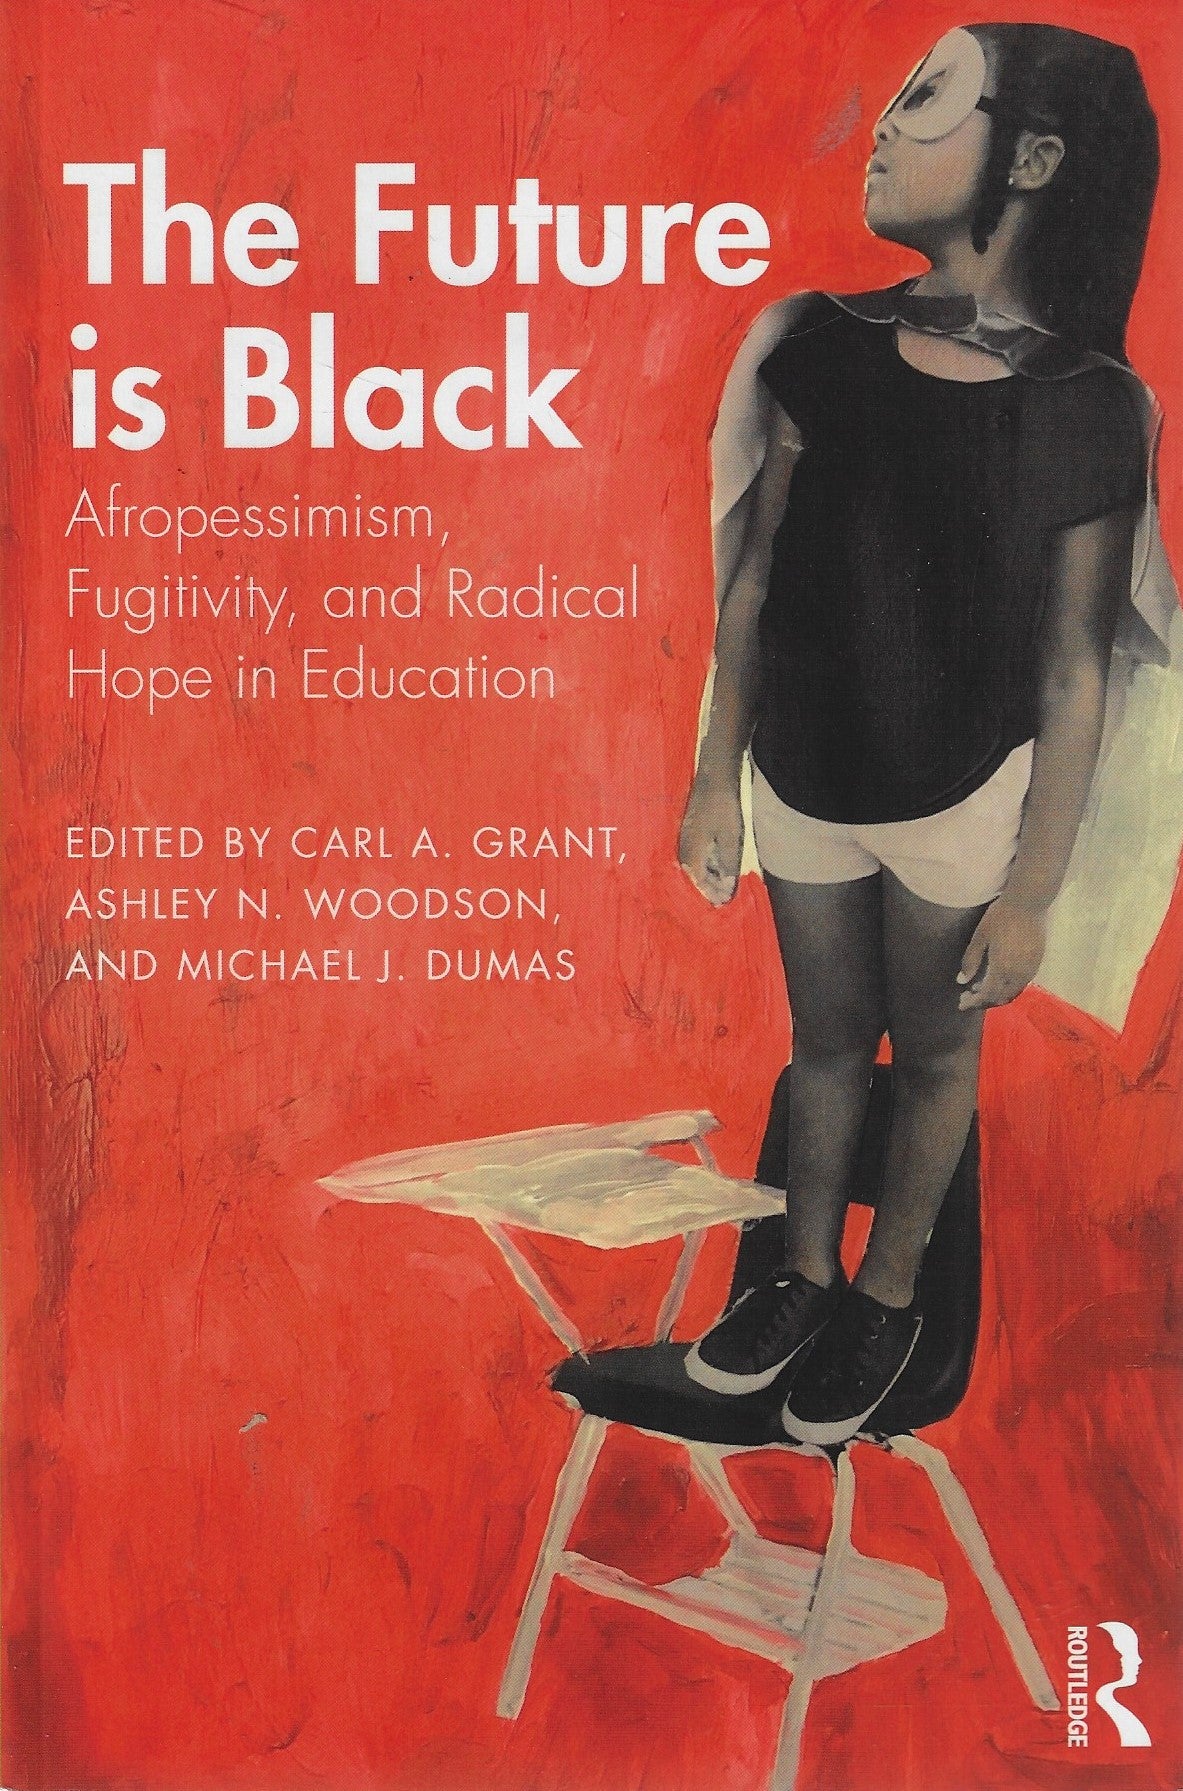 The Future is Black - Afropessimism, Fugitivity, and Radical Hope in Education